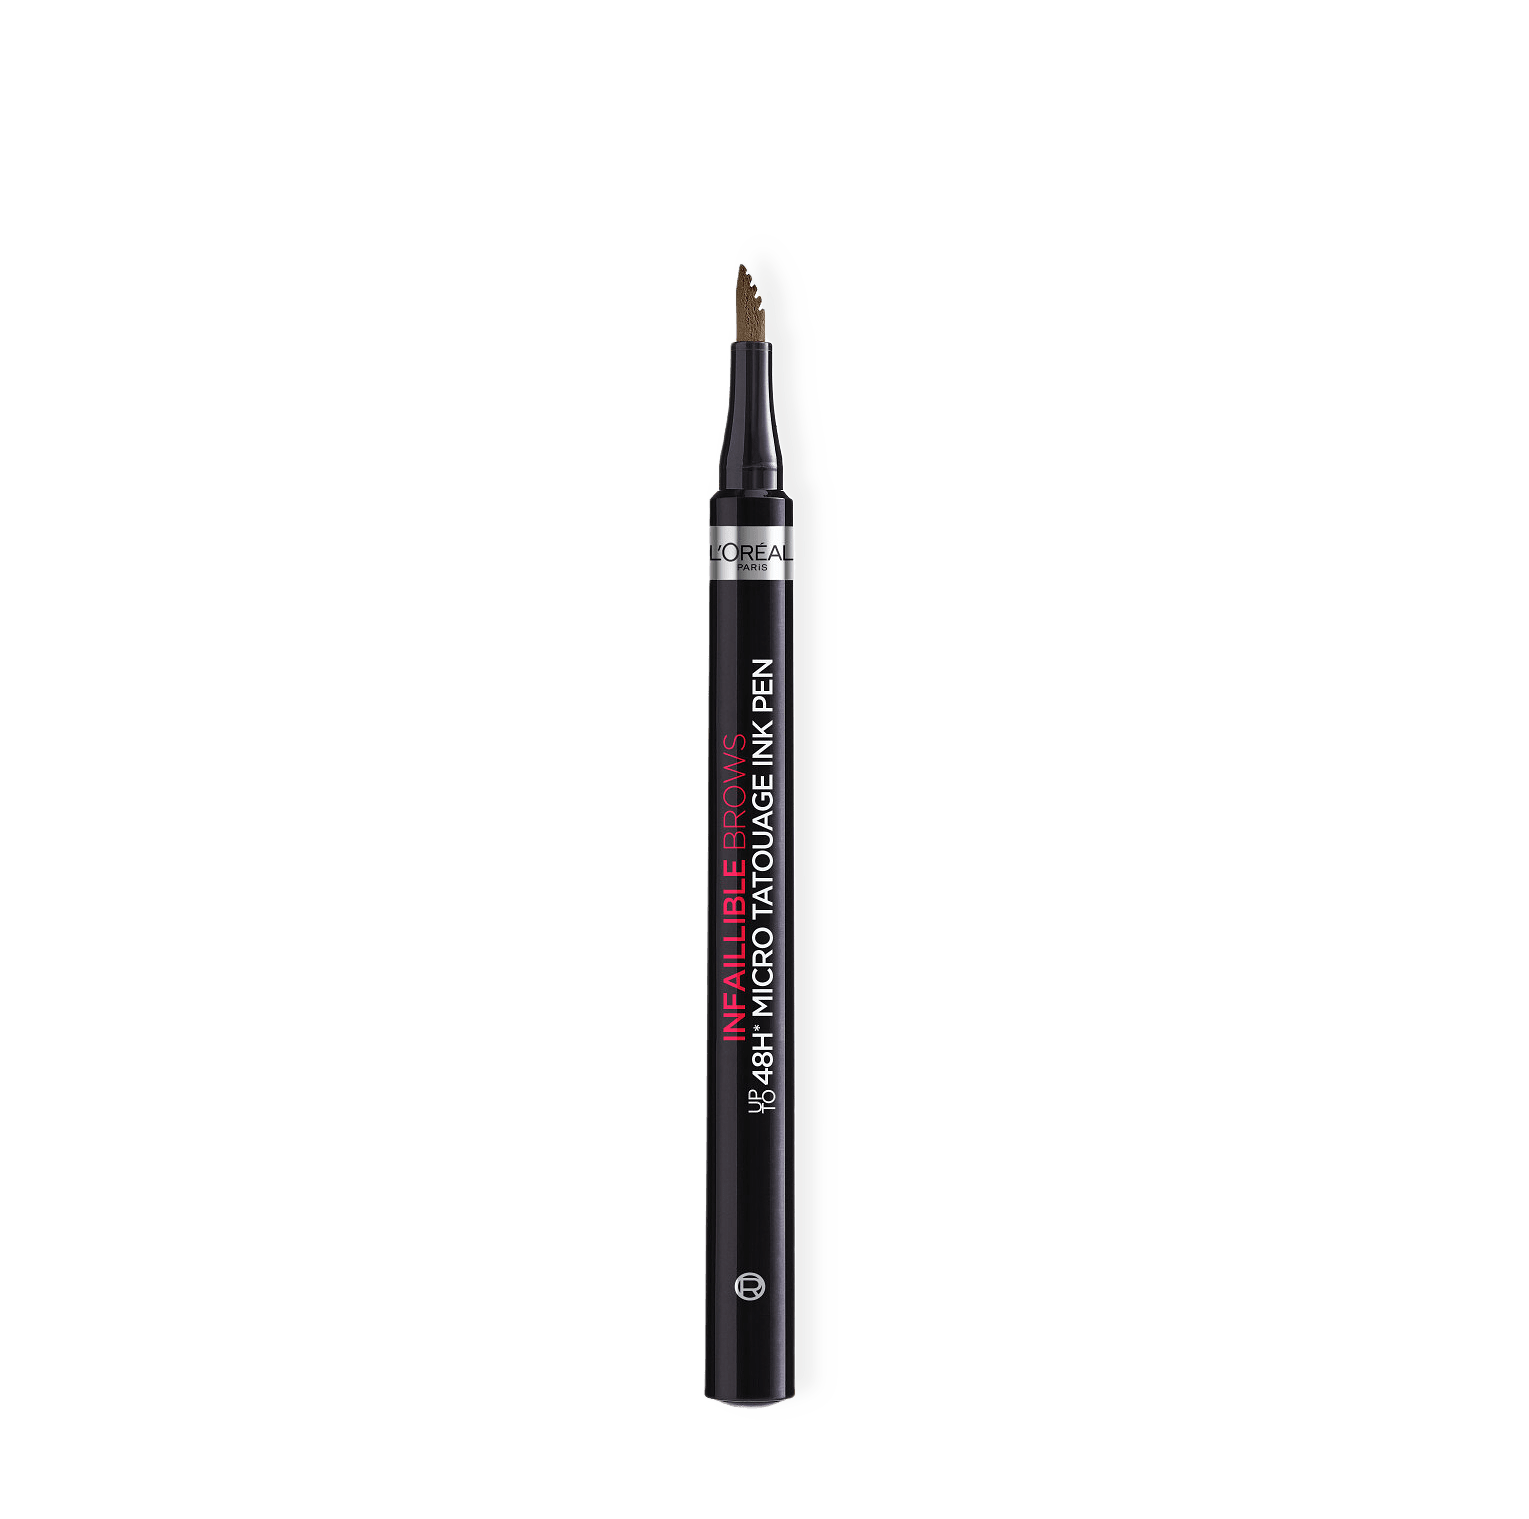 Unbelieva'Brow Micro Tatouage från L'Oréal Paris